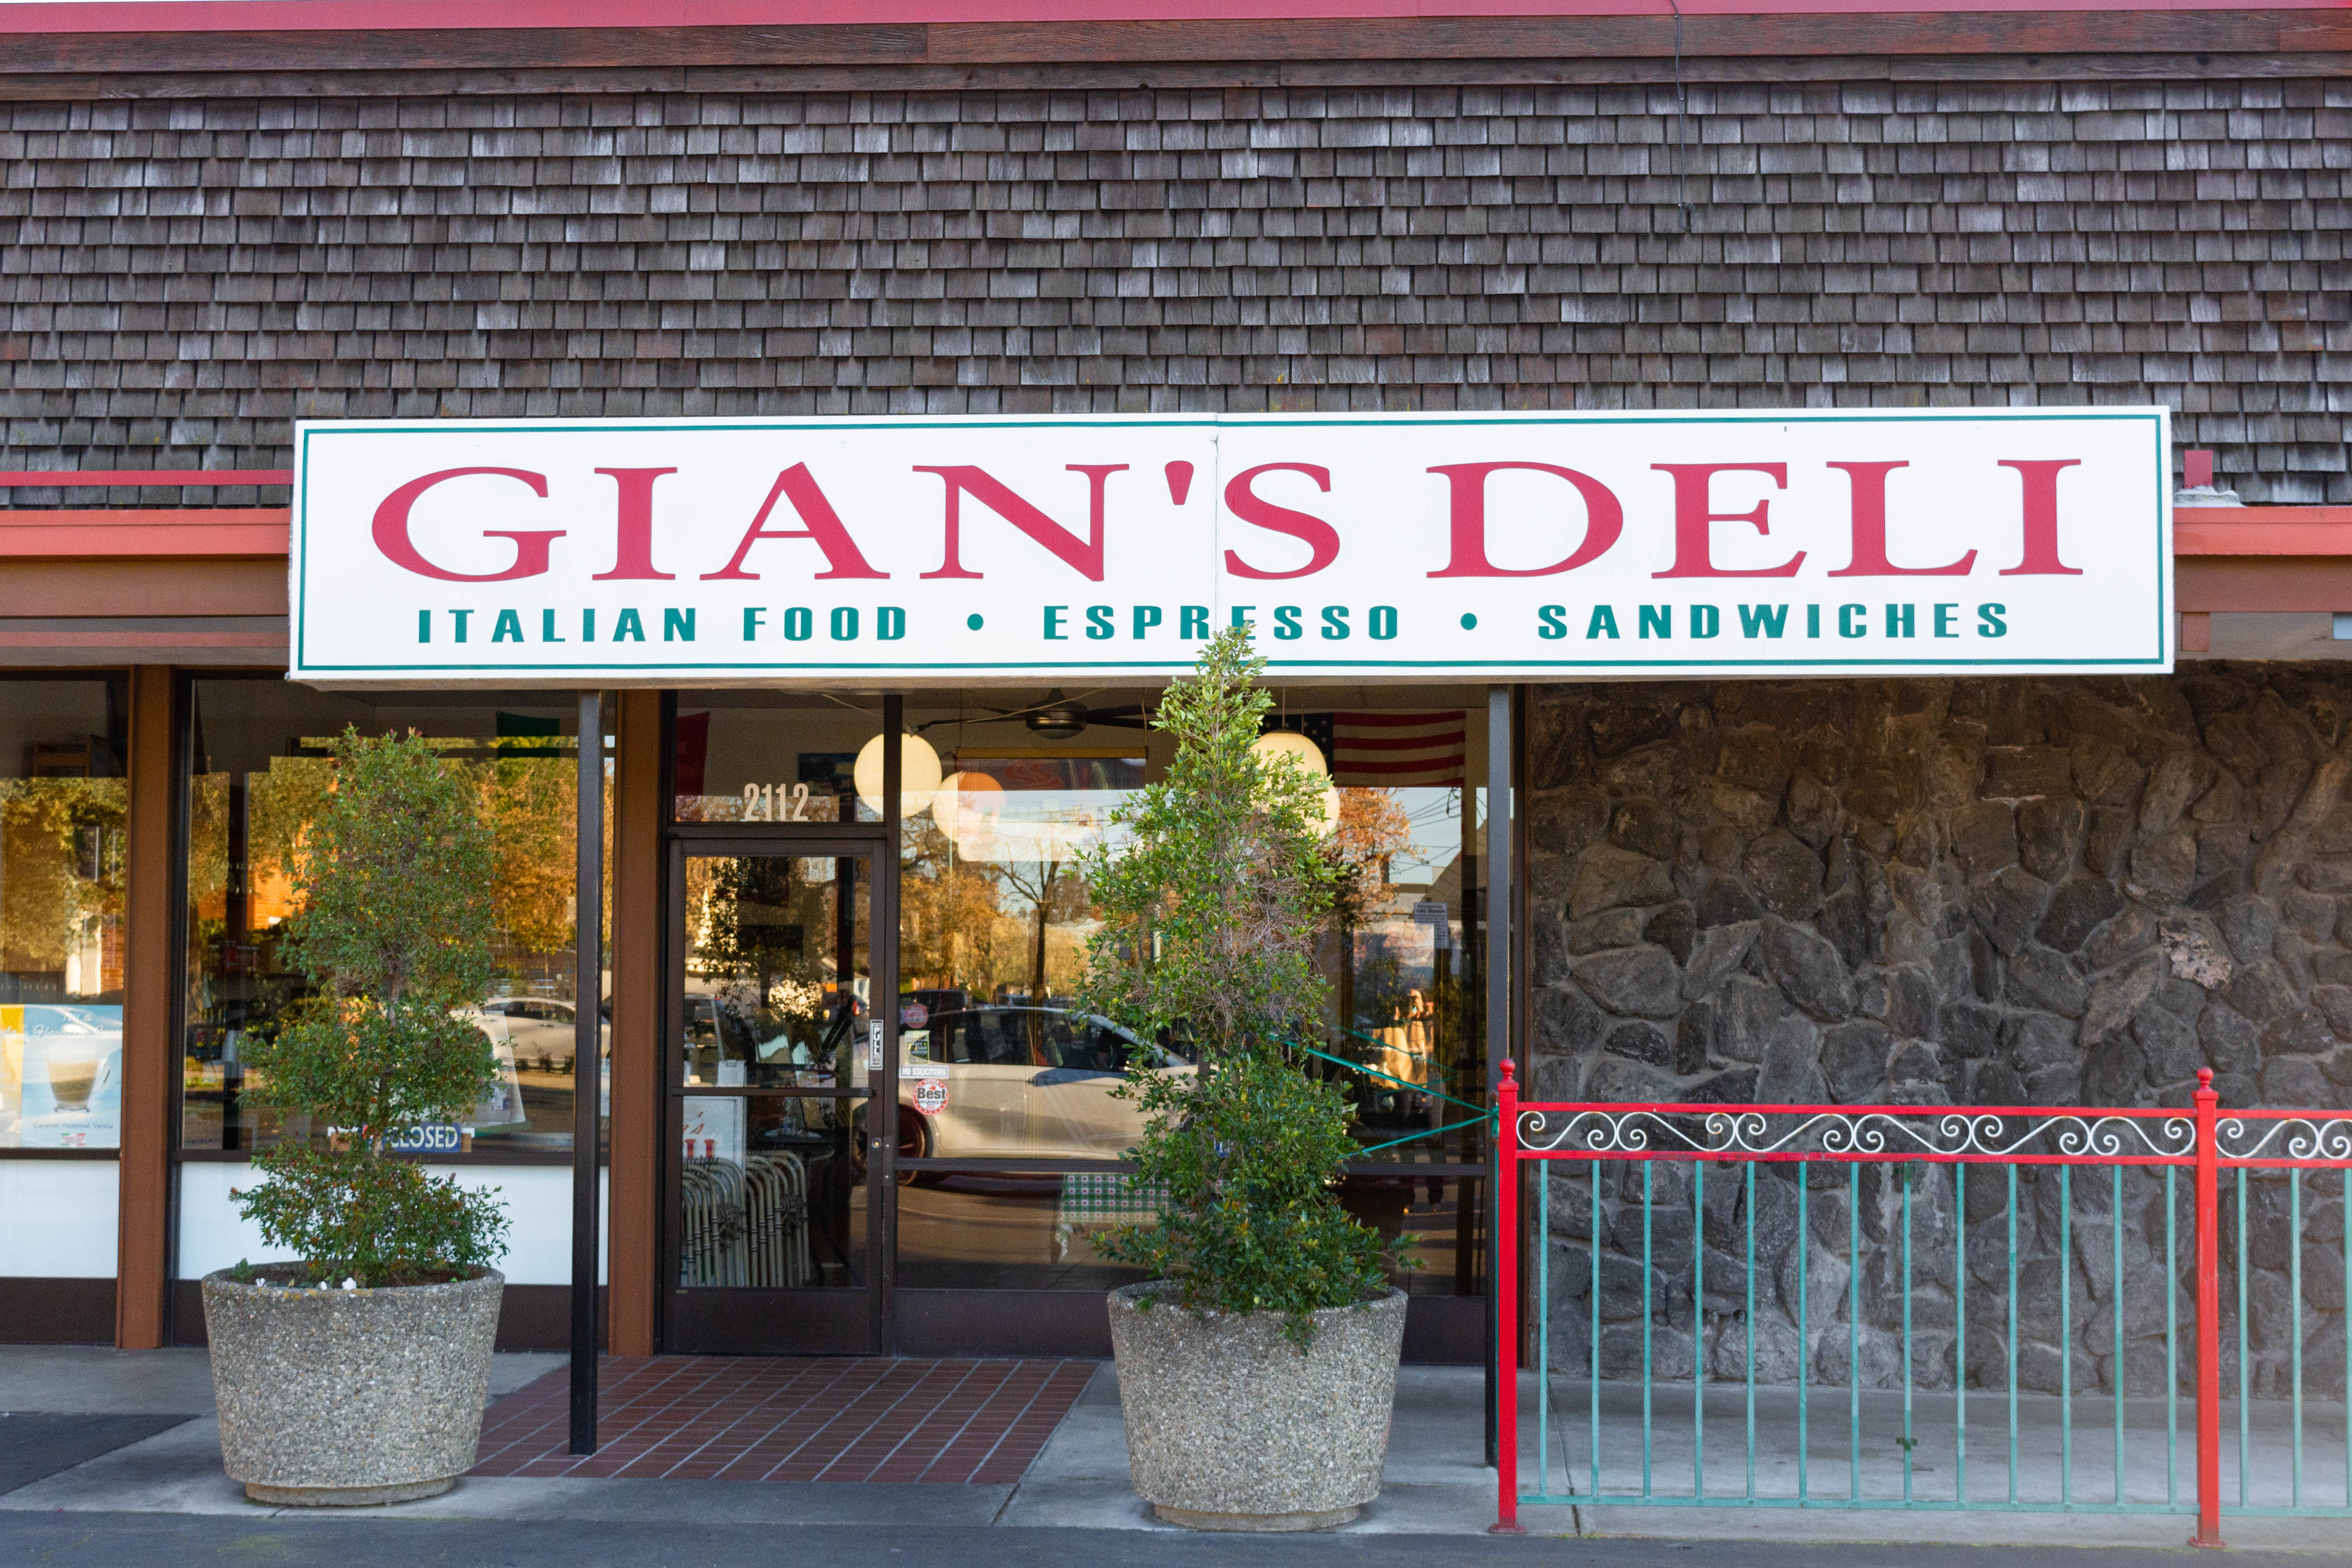 Gian's Deli